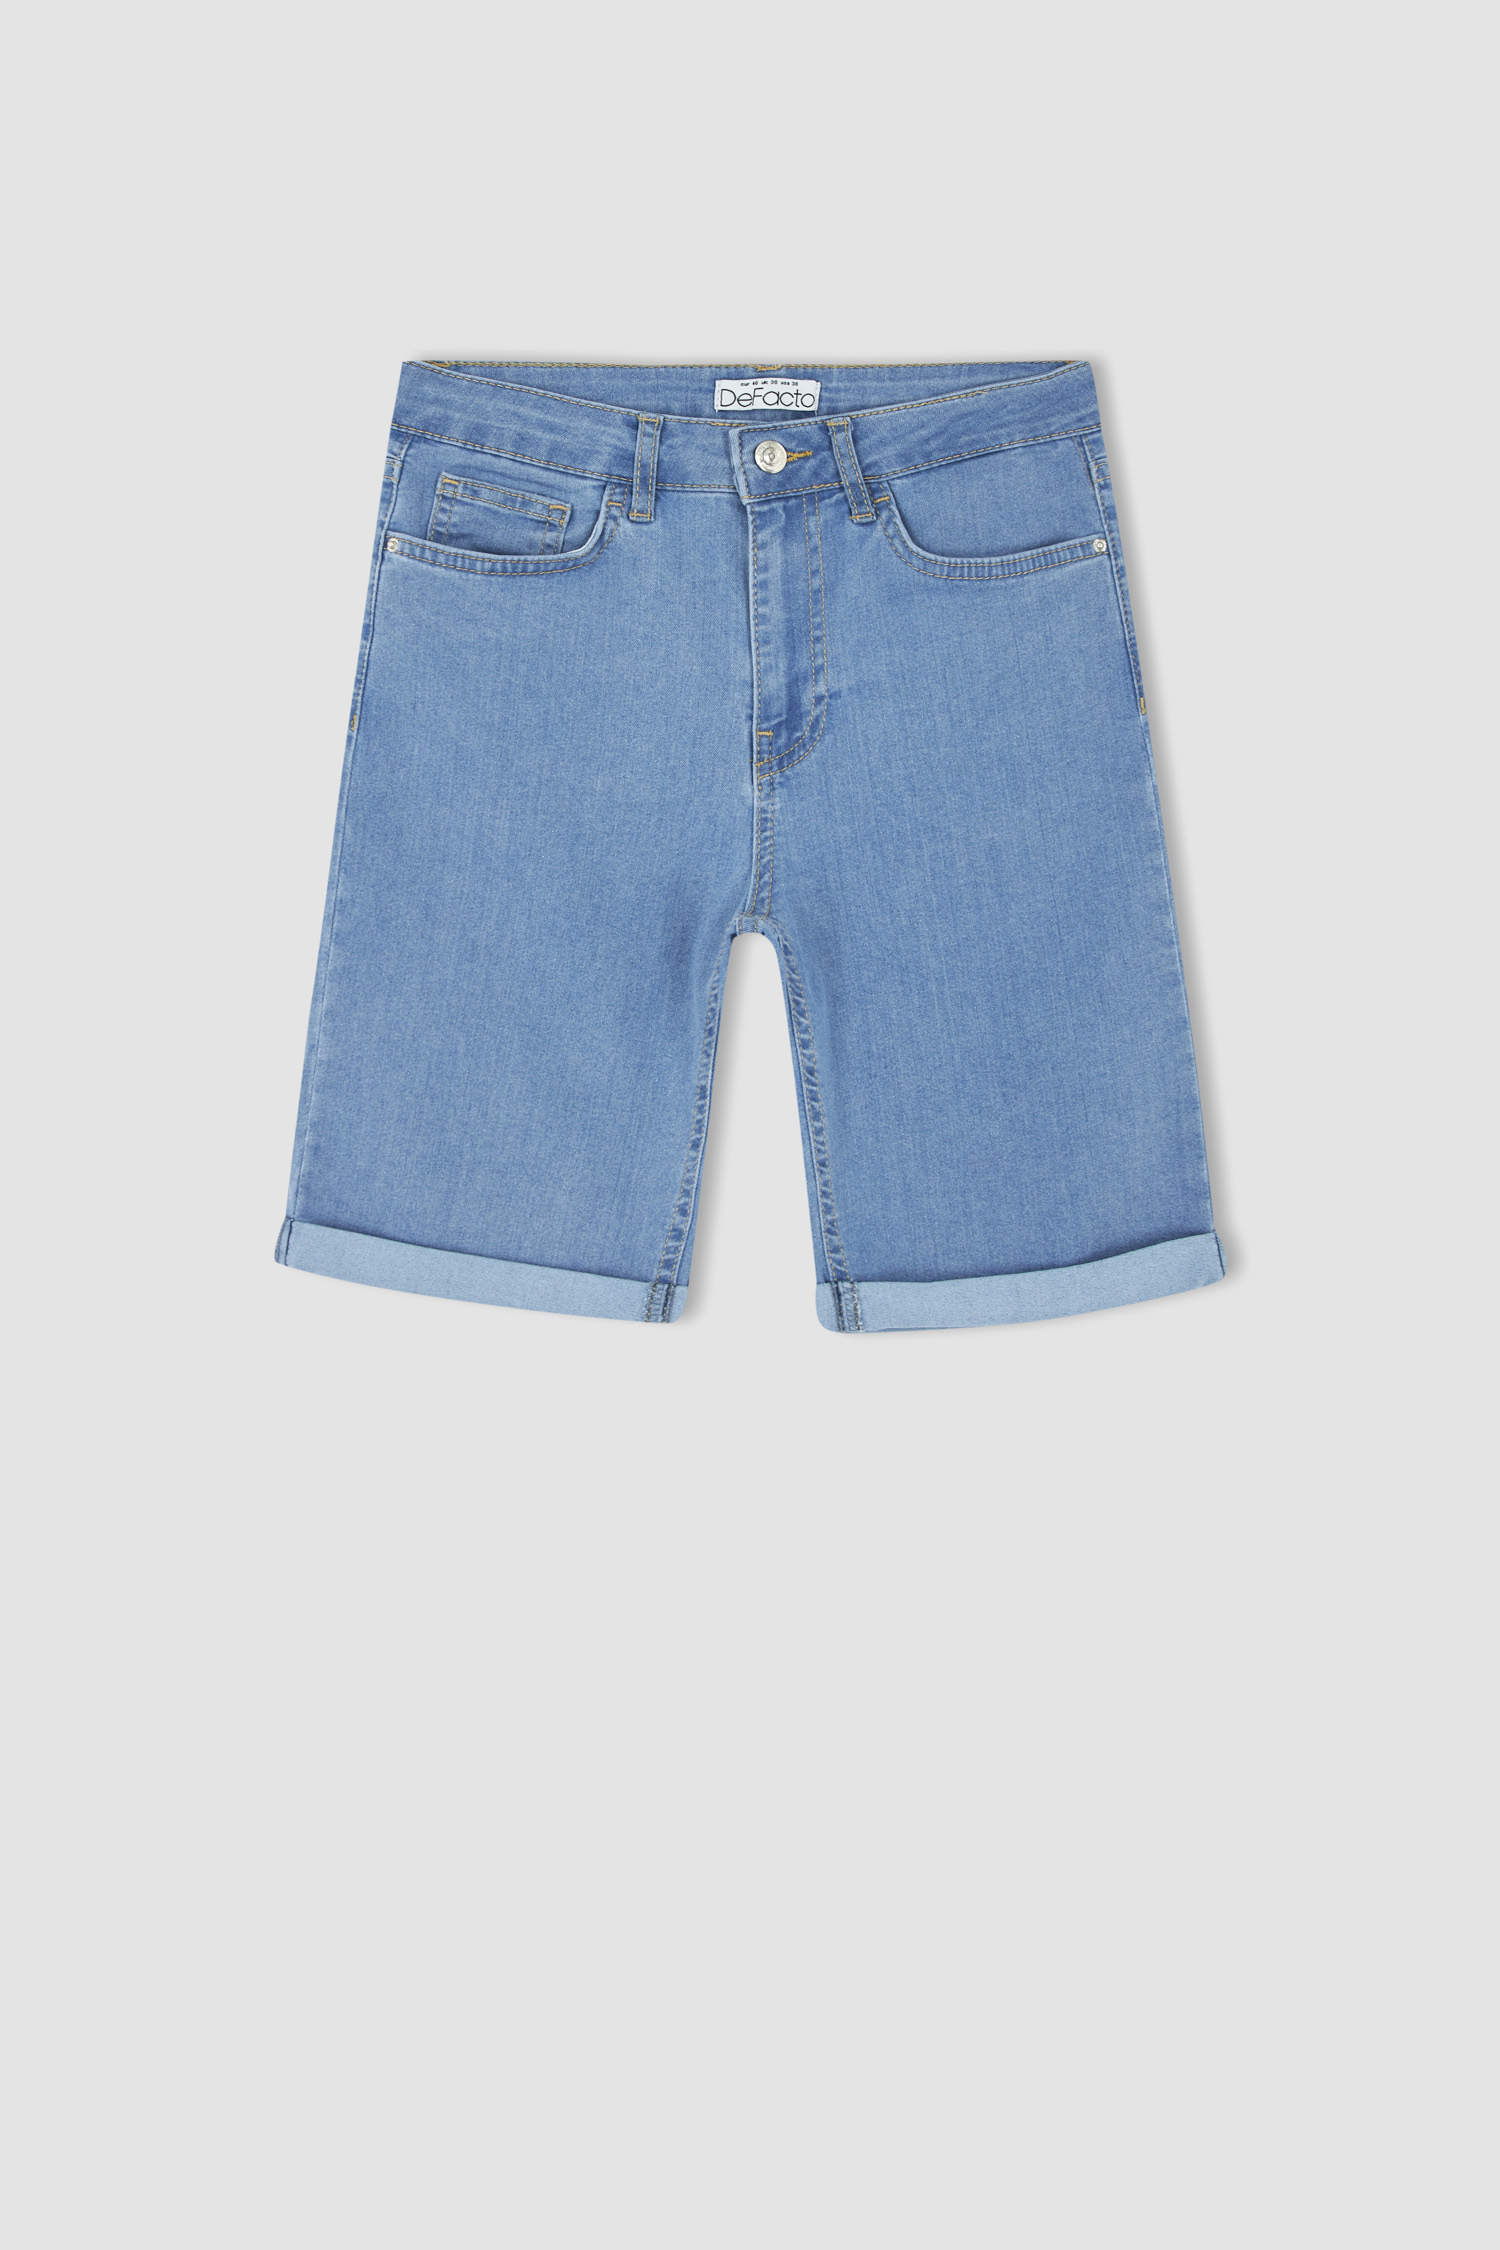 Blue WOMEN Basic Crop Jean Shorts 2418480 | DeFacto